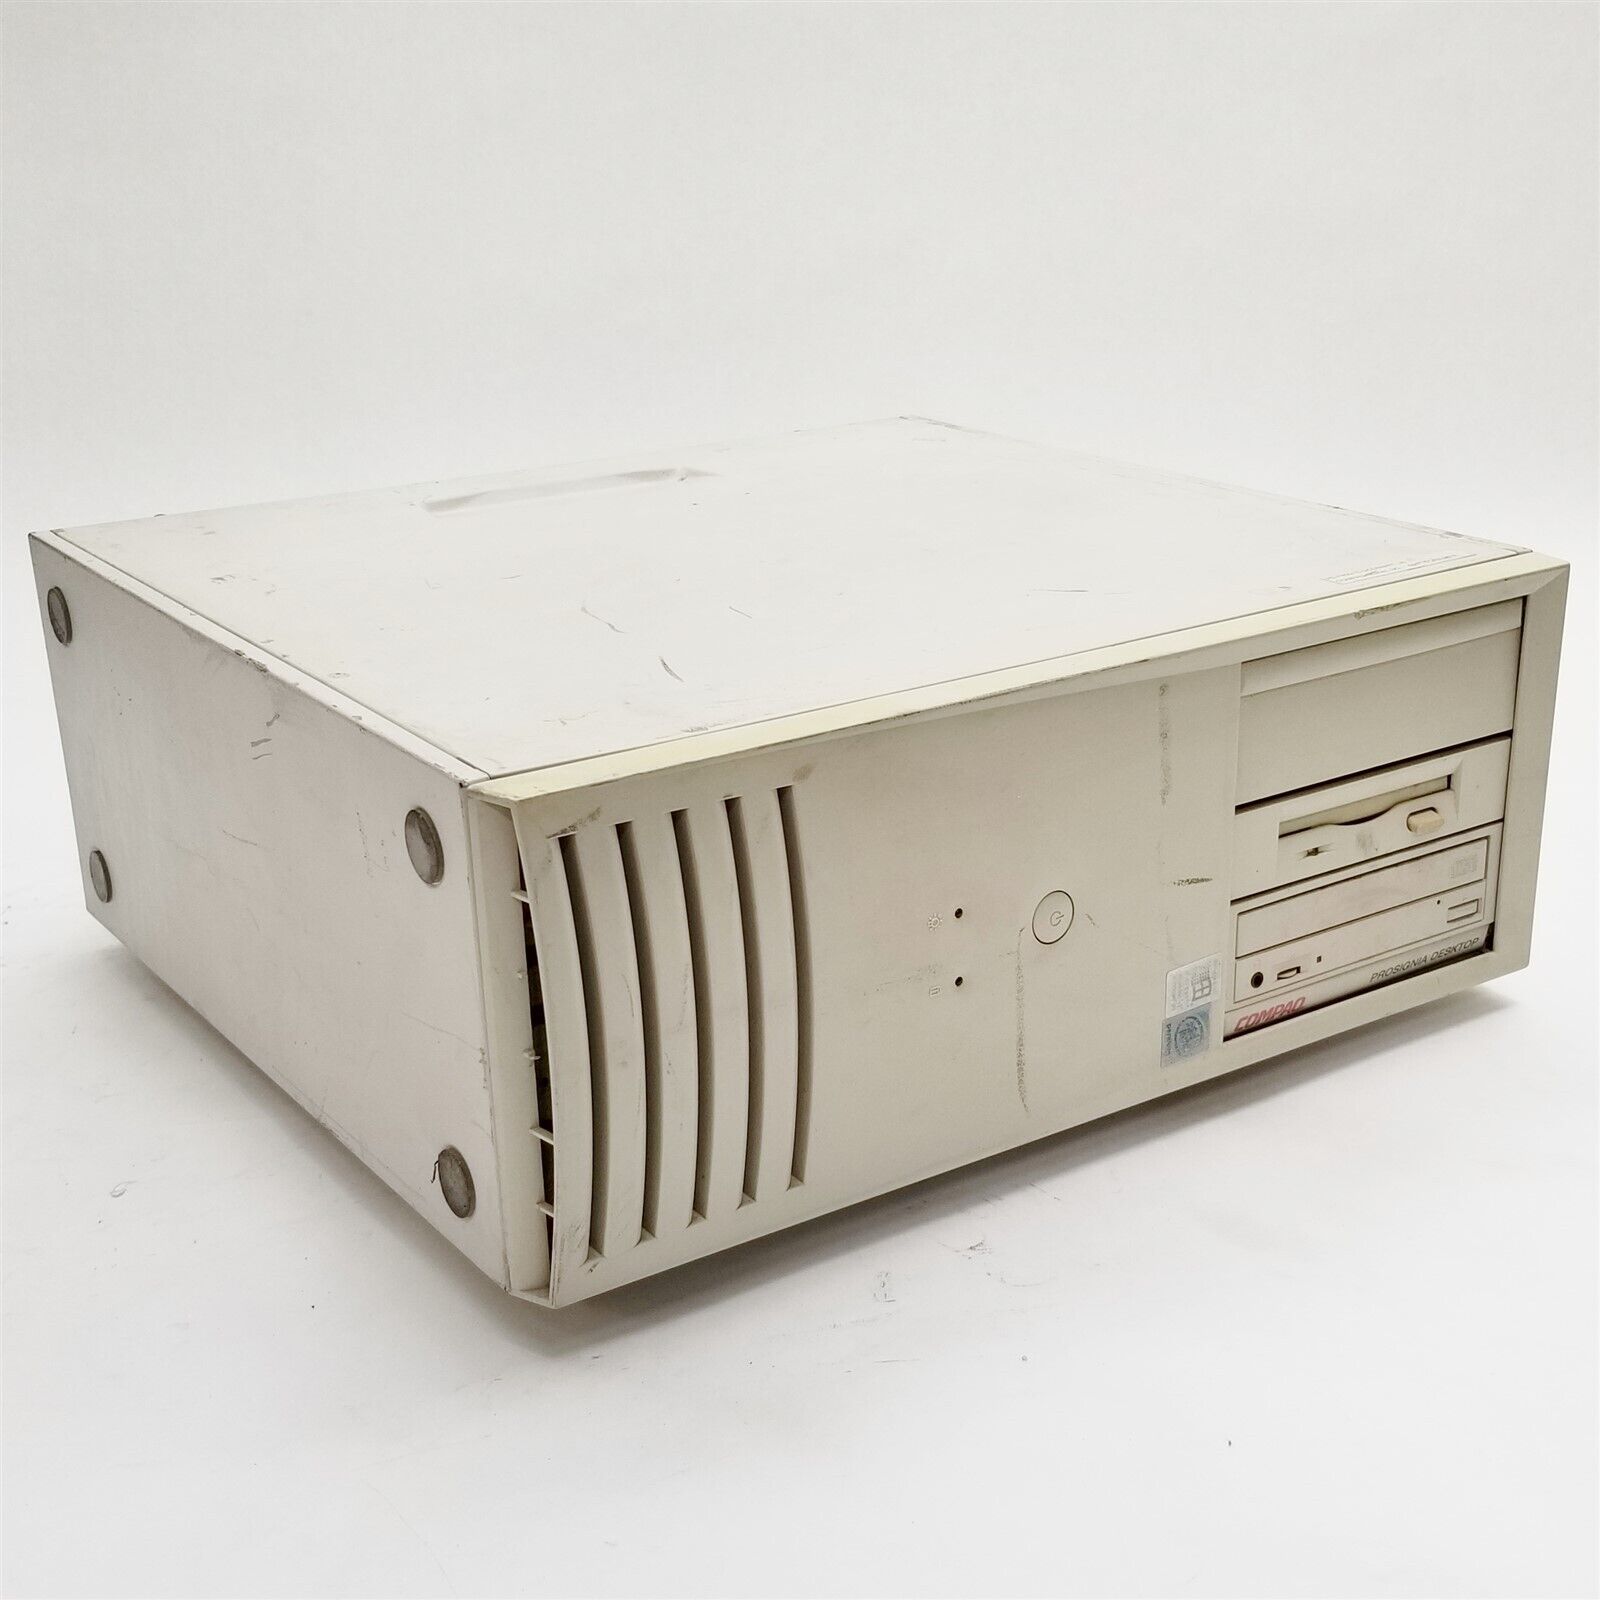 Compaq Prosignia Desktop Pentium II 400MHz 608MB RAM No HDD Vintage Computer PC